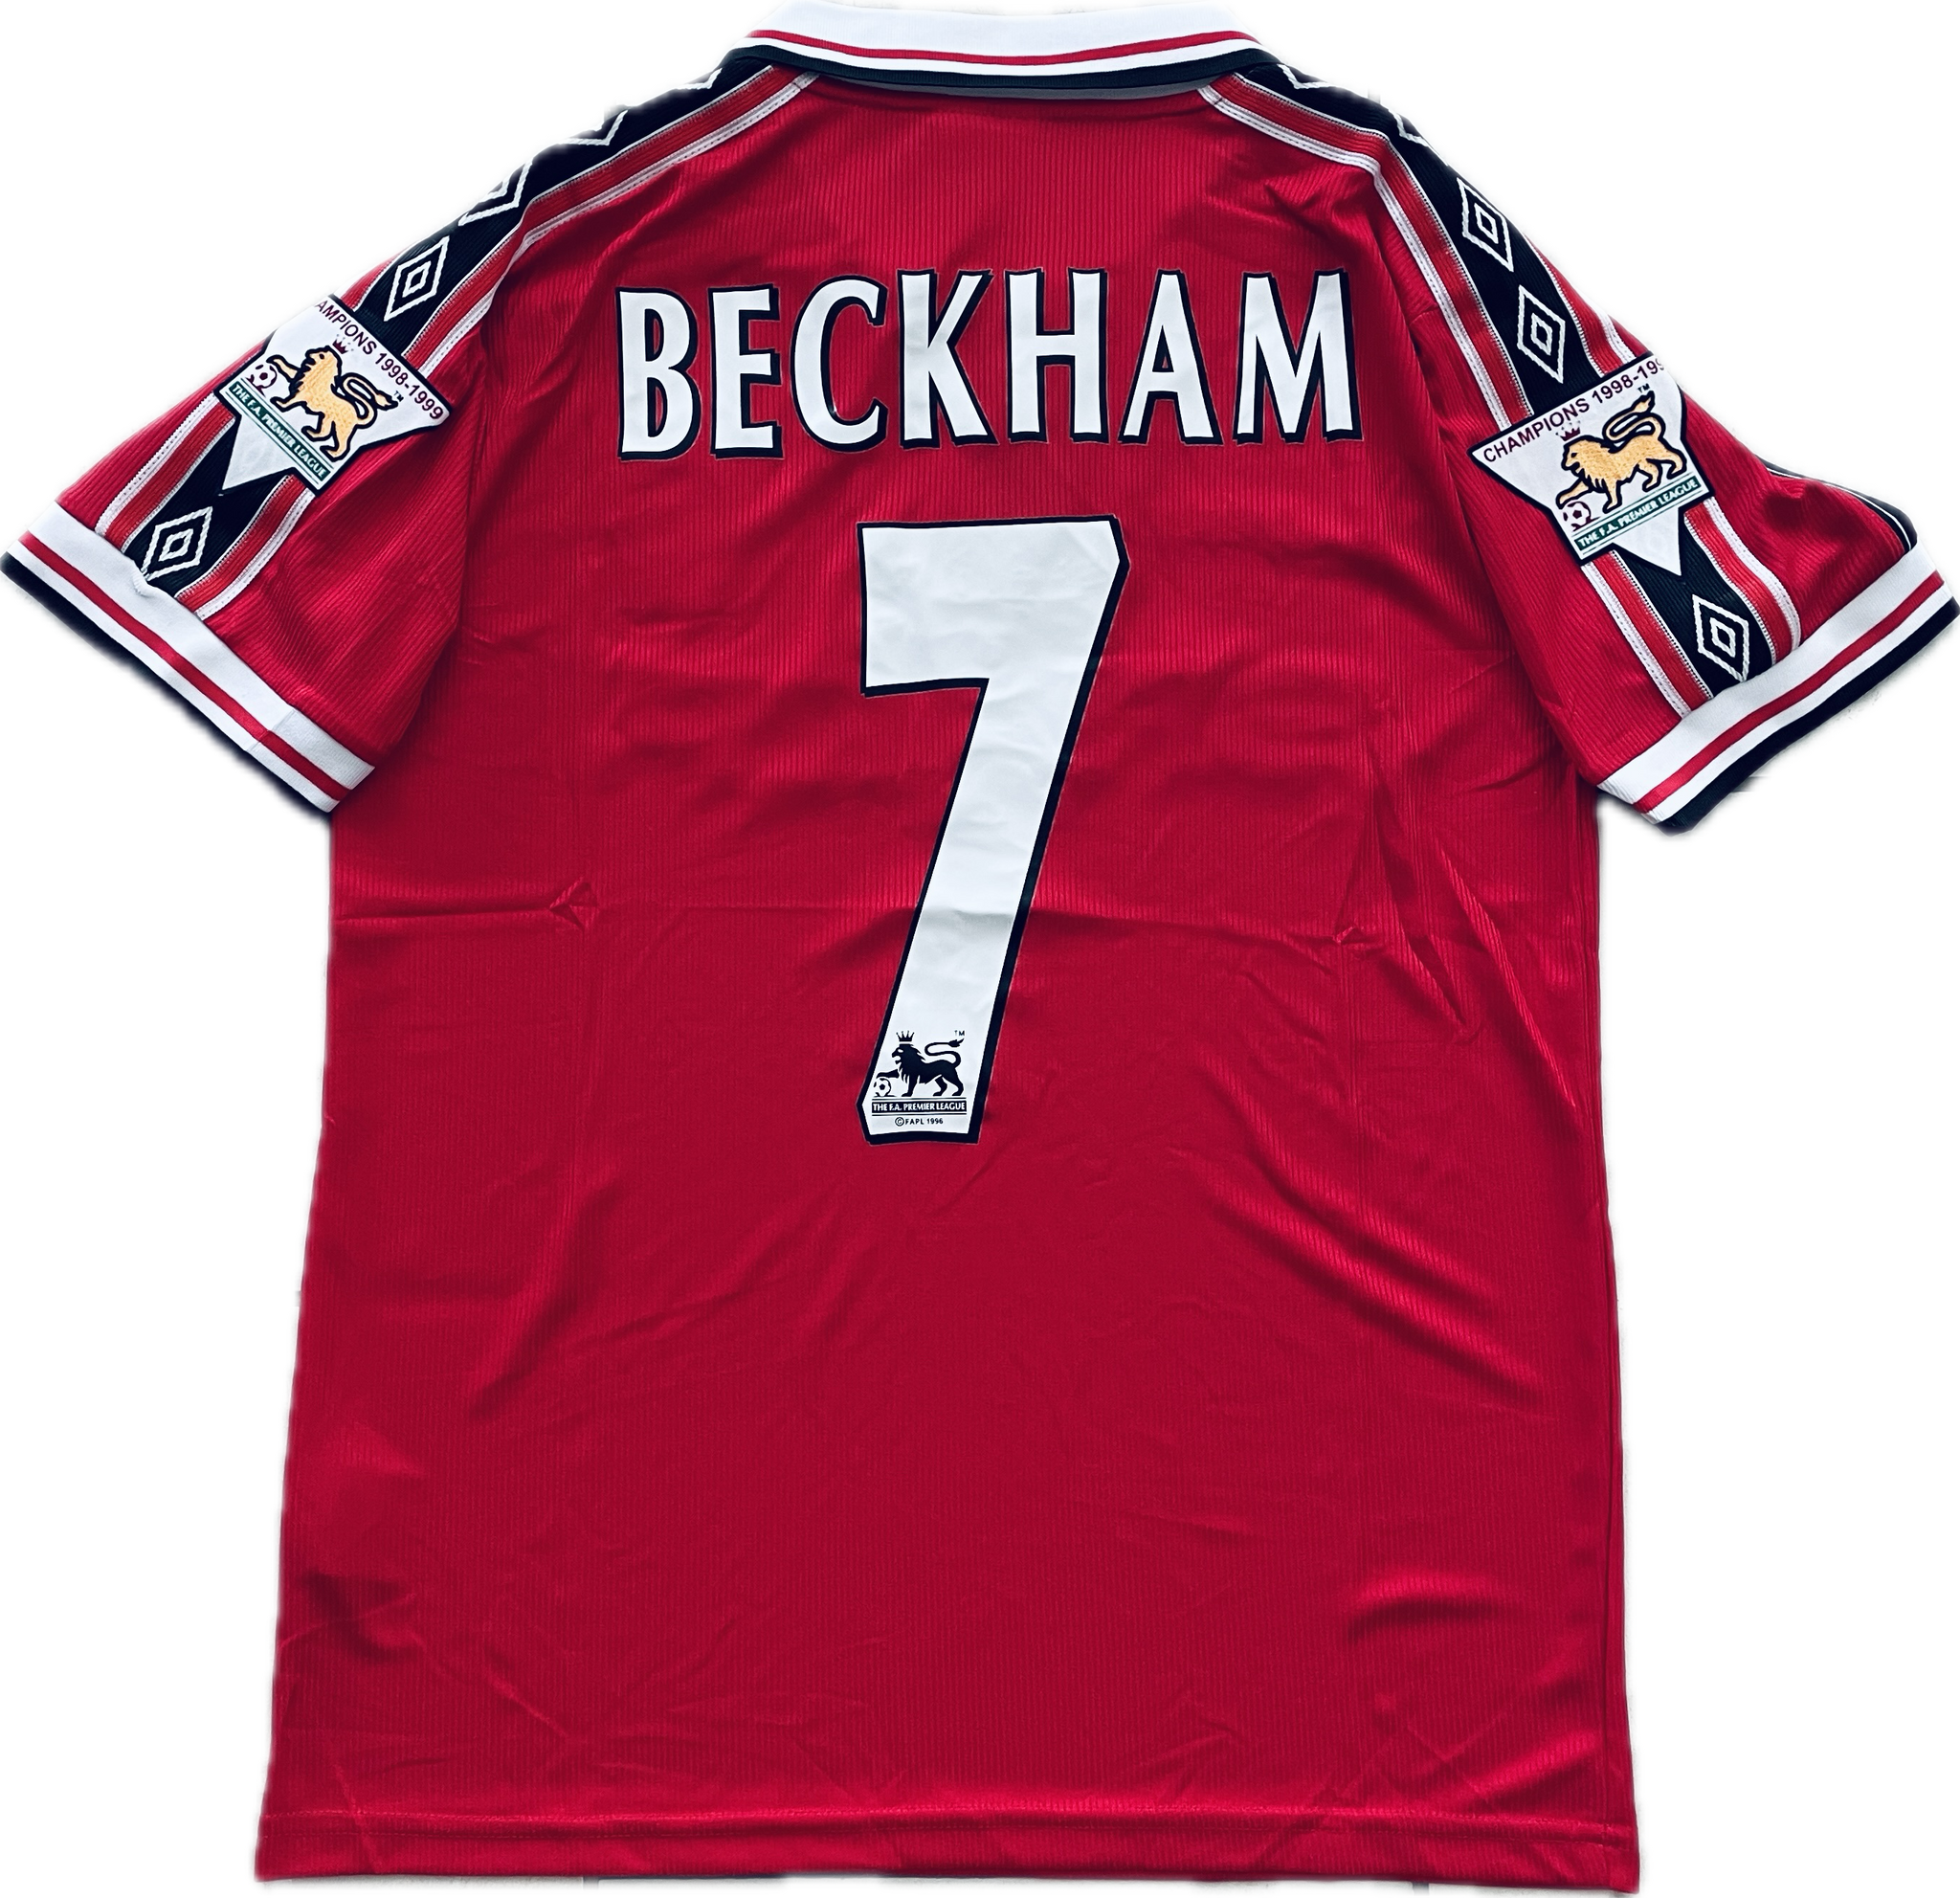 David Beckham Says Manchester United's No. 7 Shirt Should Be an